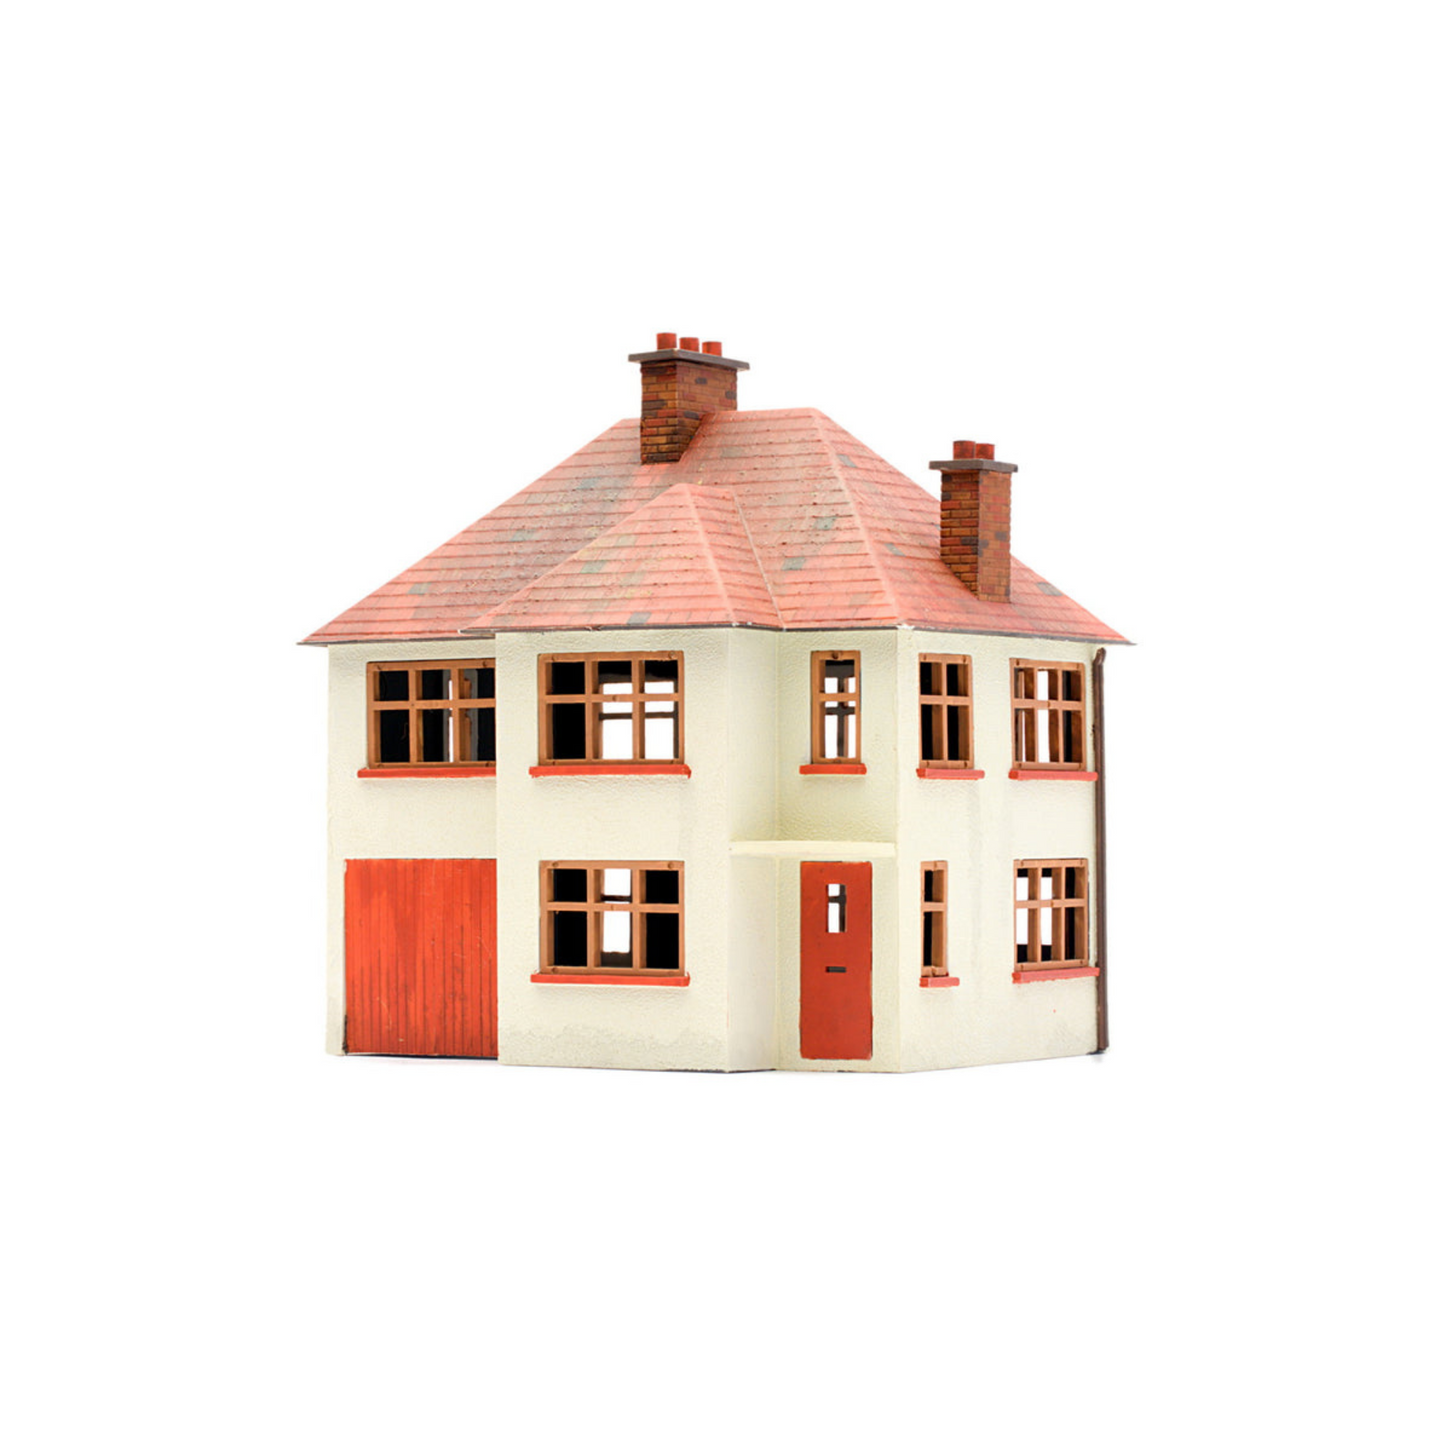 Detached House 00 Plastic Scale Model Kit